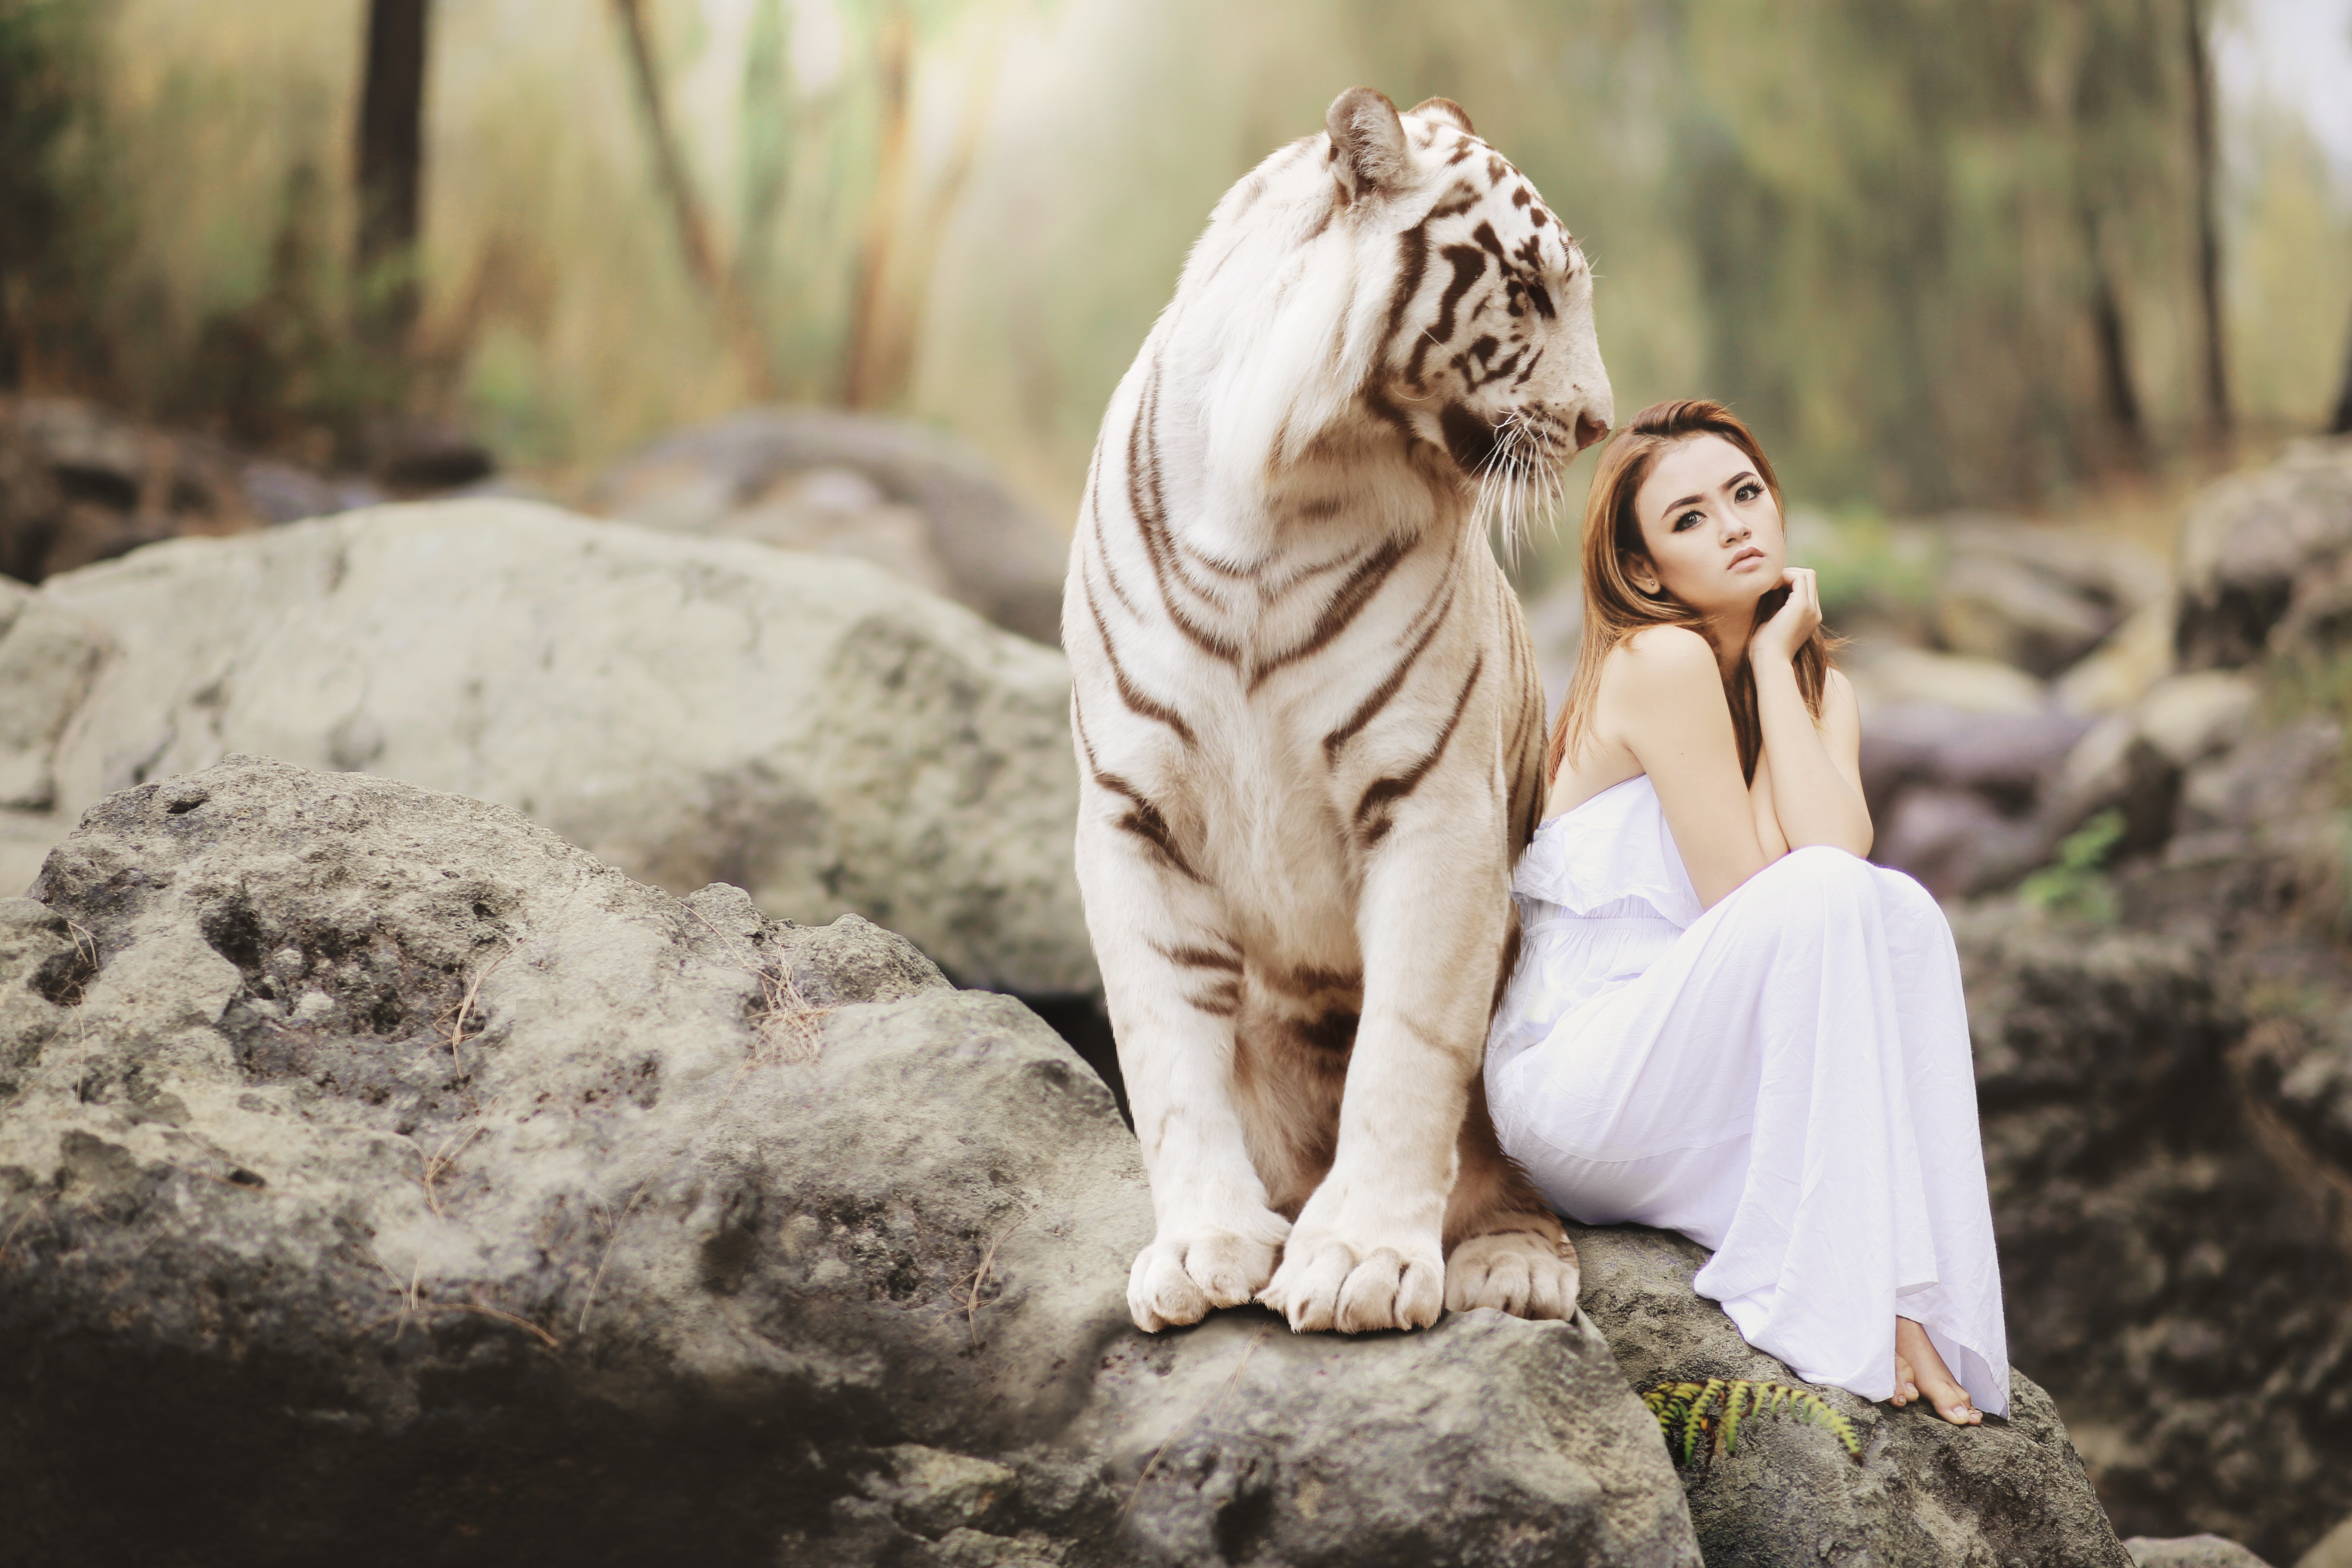 Woman with animals. Тигр и девушка. Белый тигр. Фотосессия с животными. Девушка тигрица.